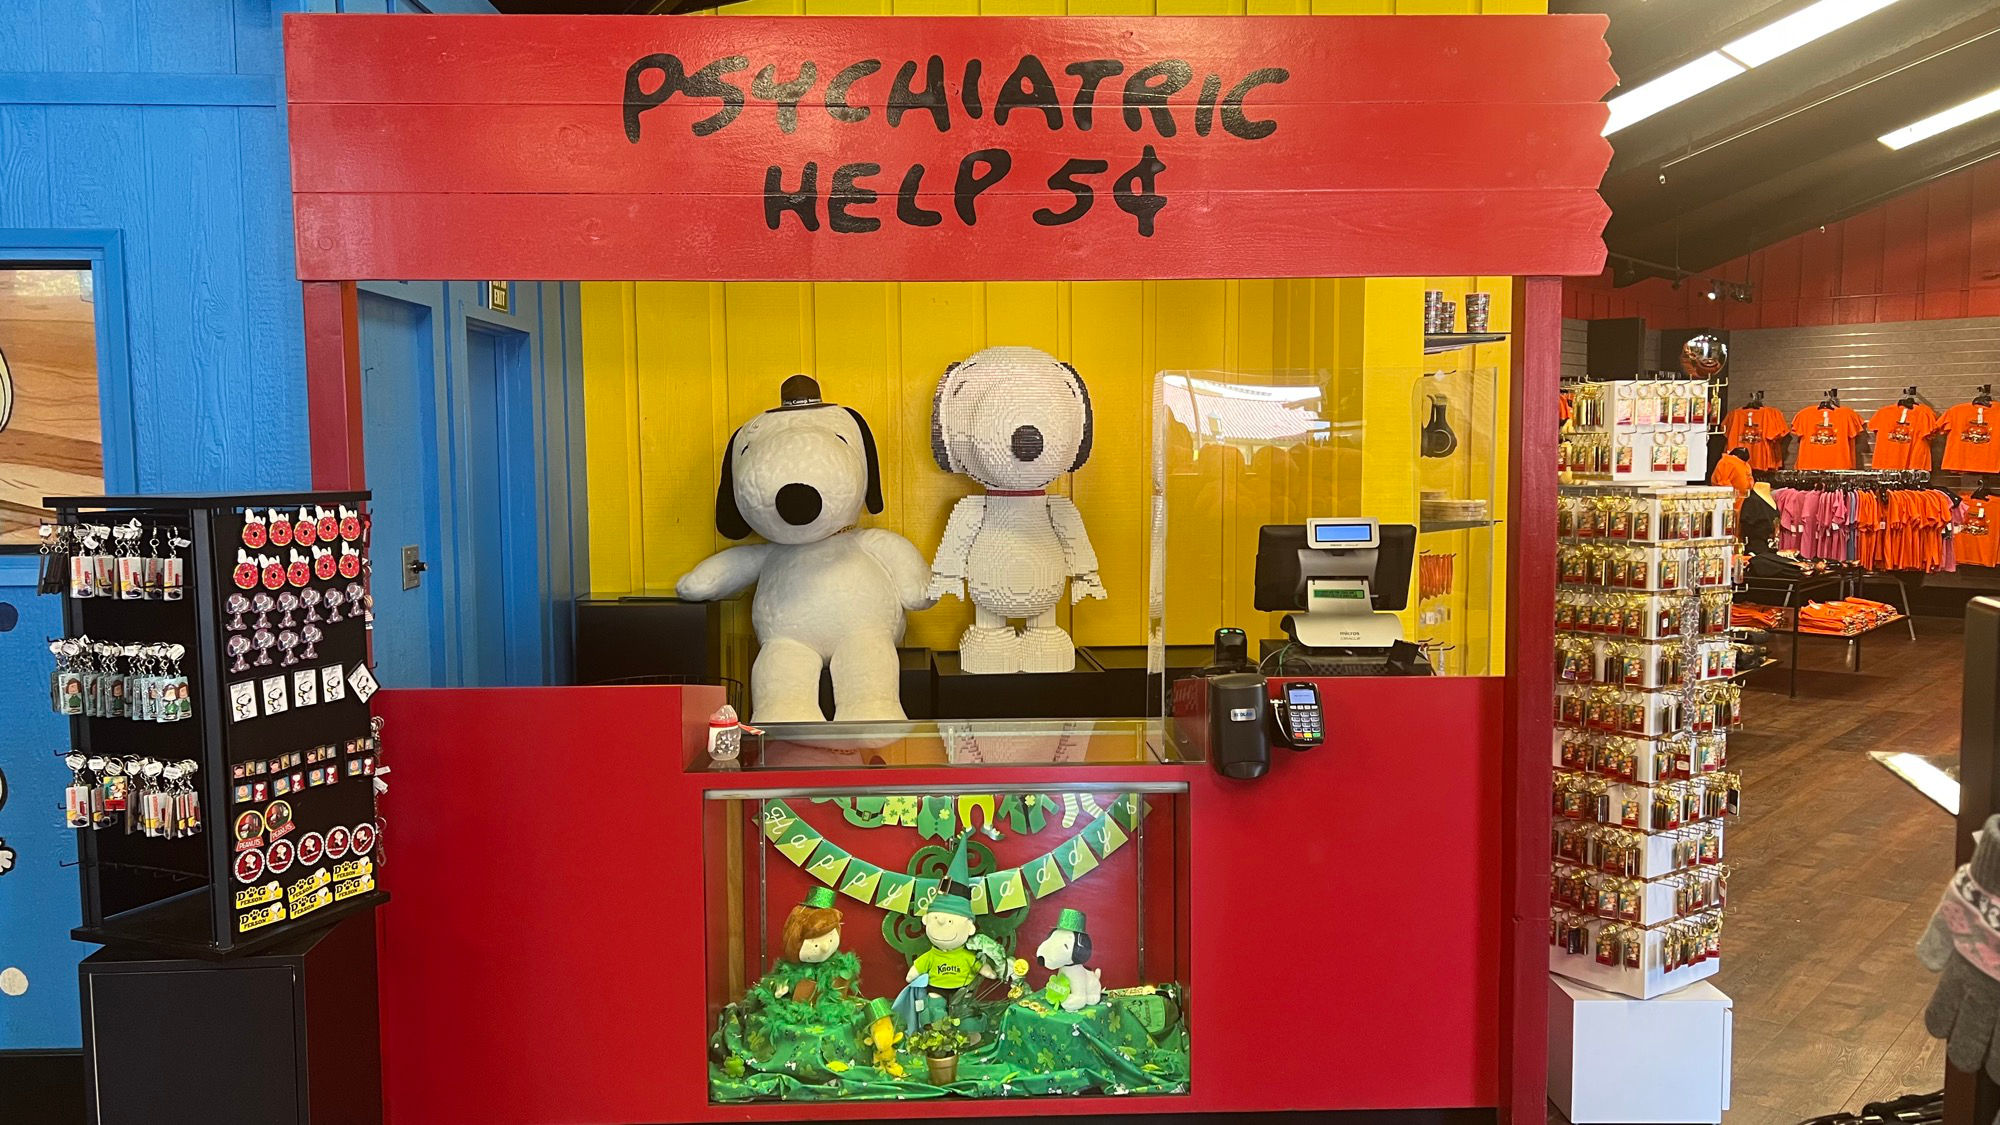 Peanuts Headquarters Psychiatric Help 5c